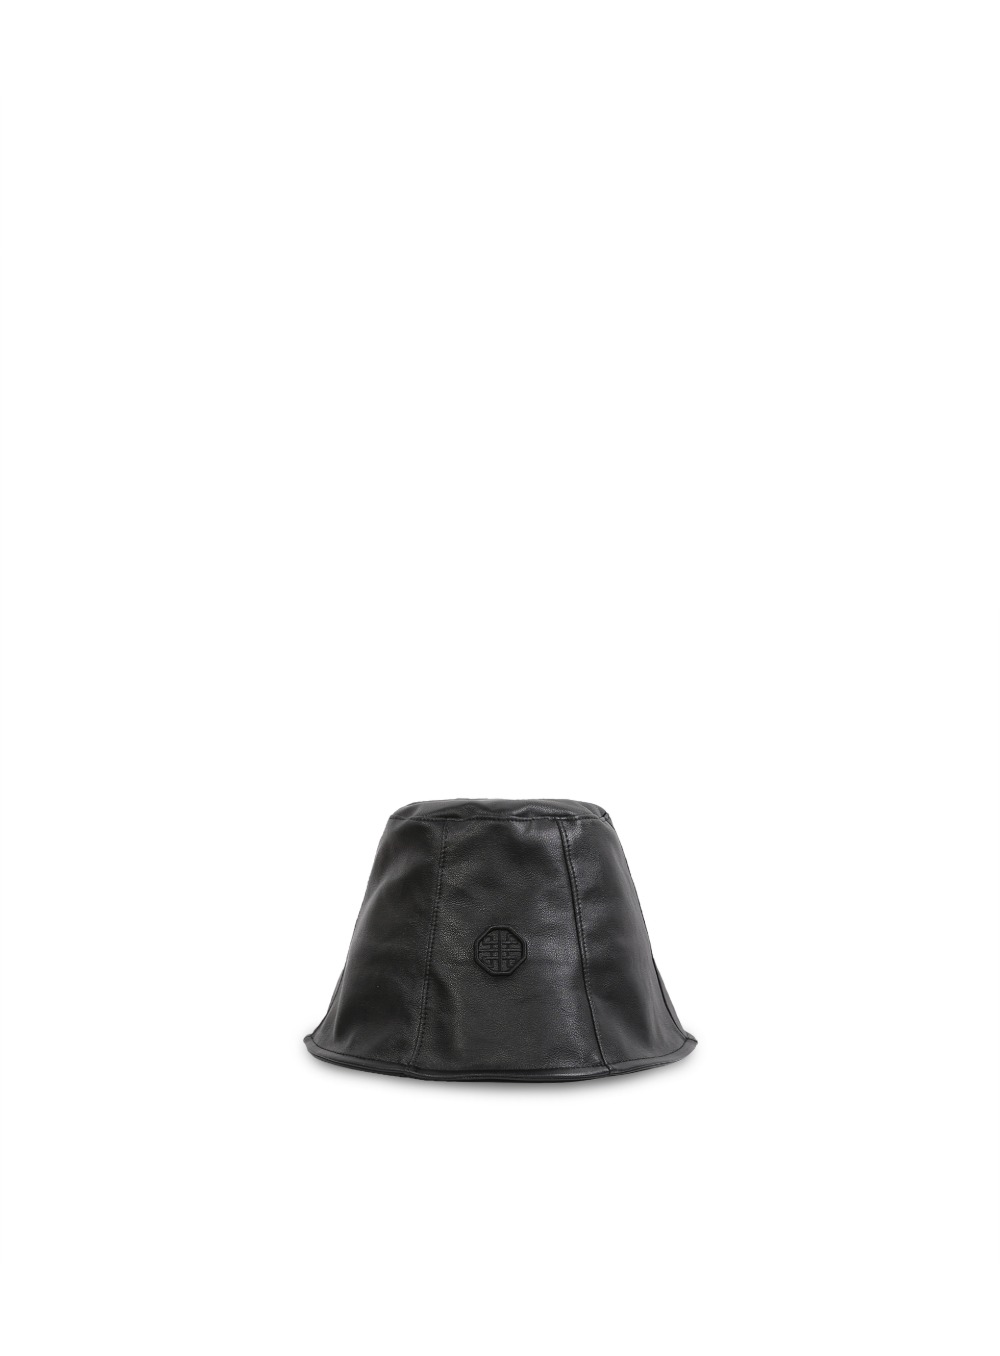 Leather Bucket Hat - Black